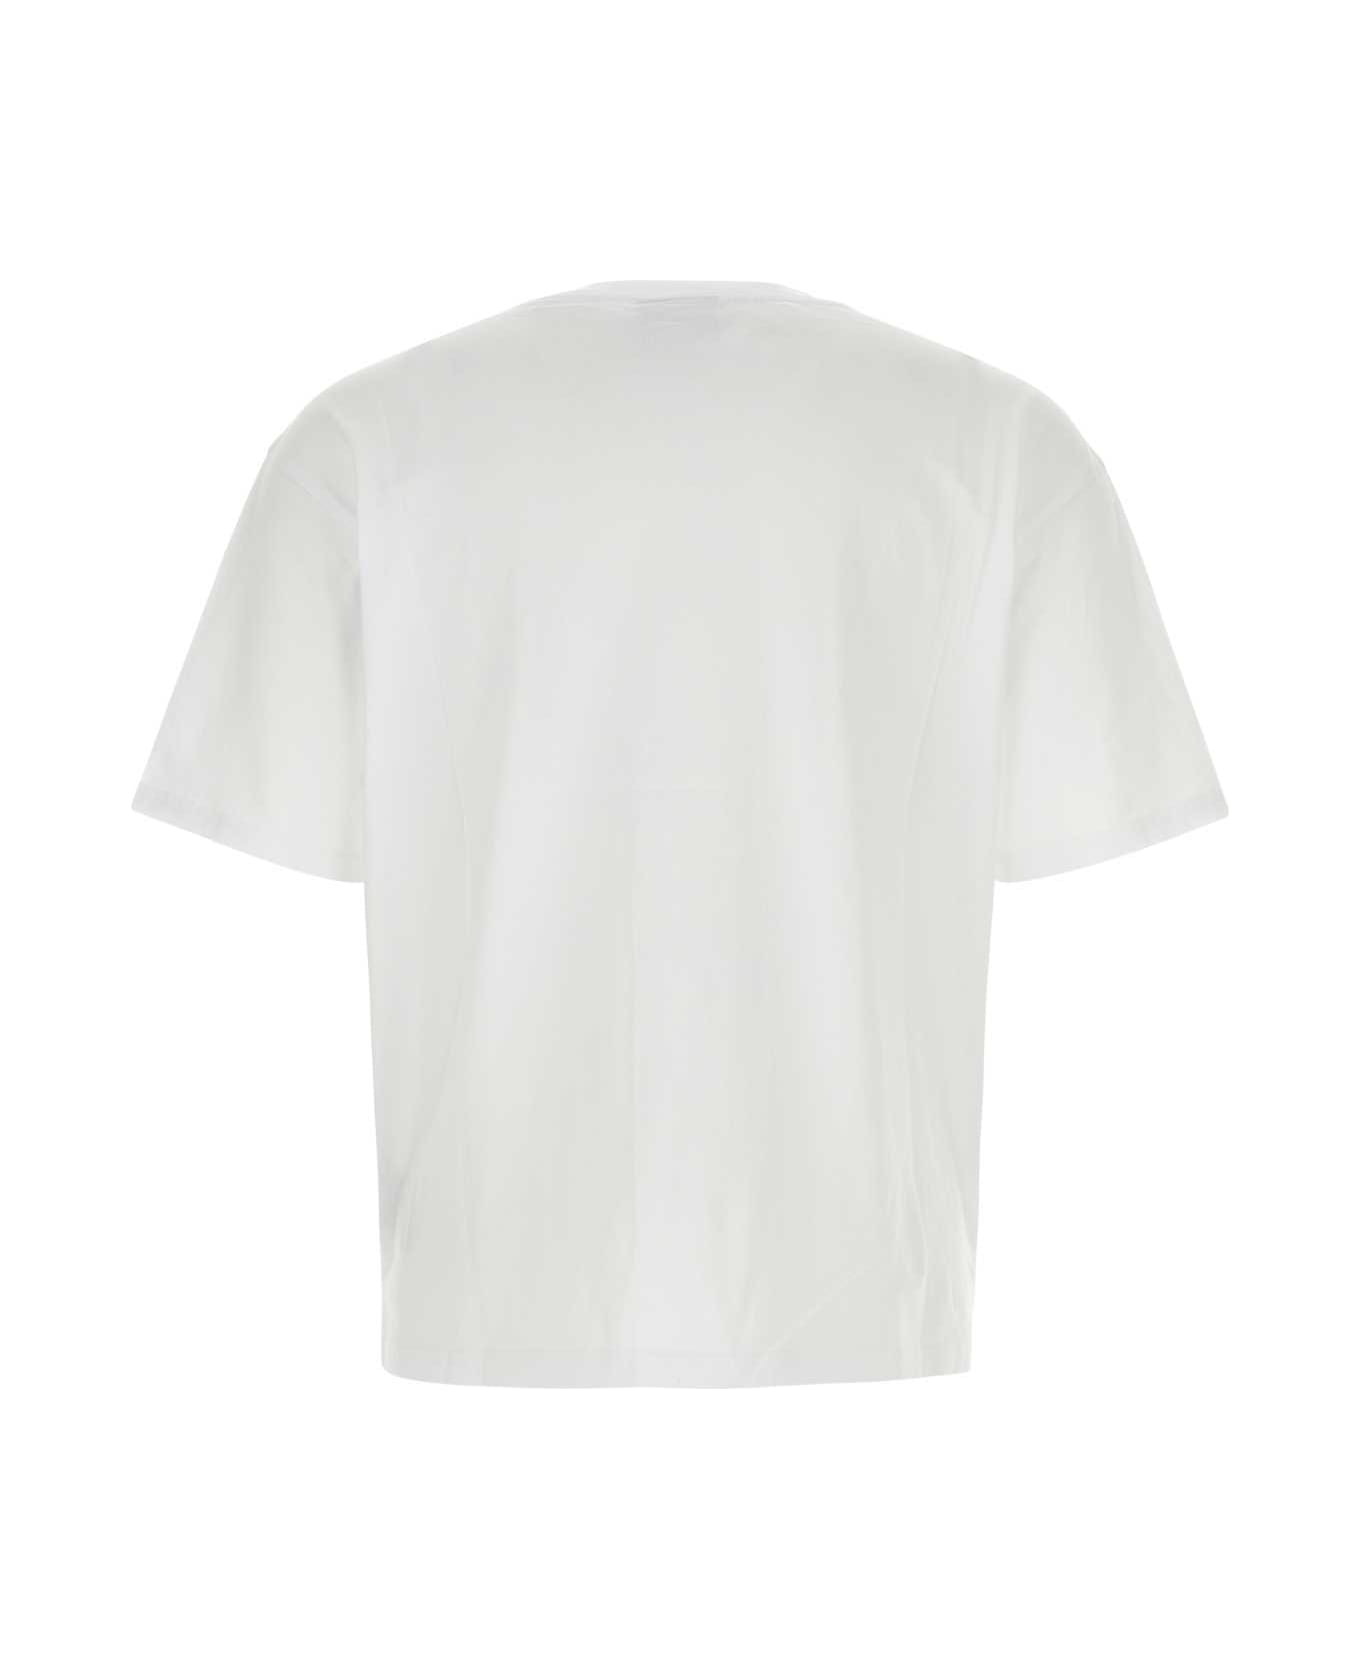 Bluemarble White Cotton T-shirt - WHT シャツ